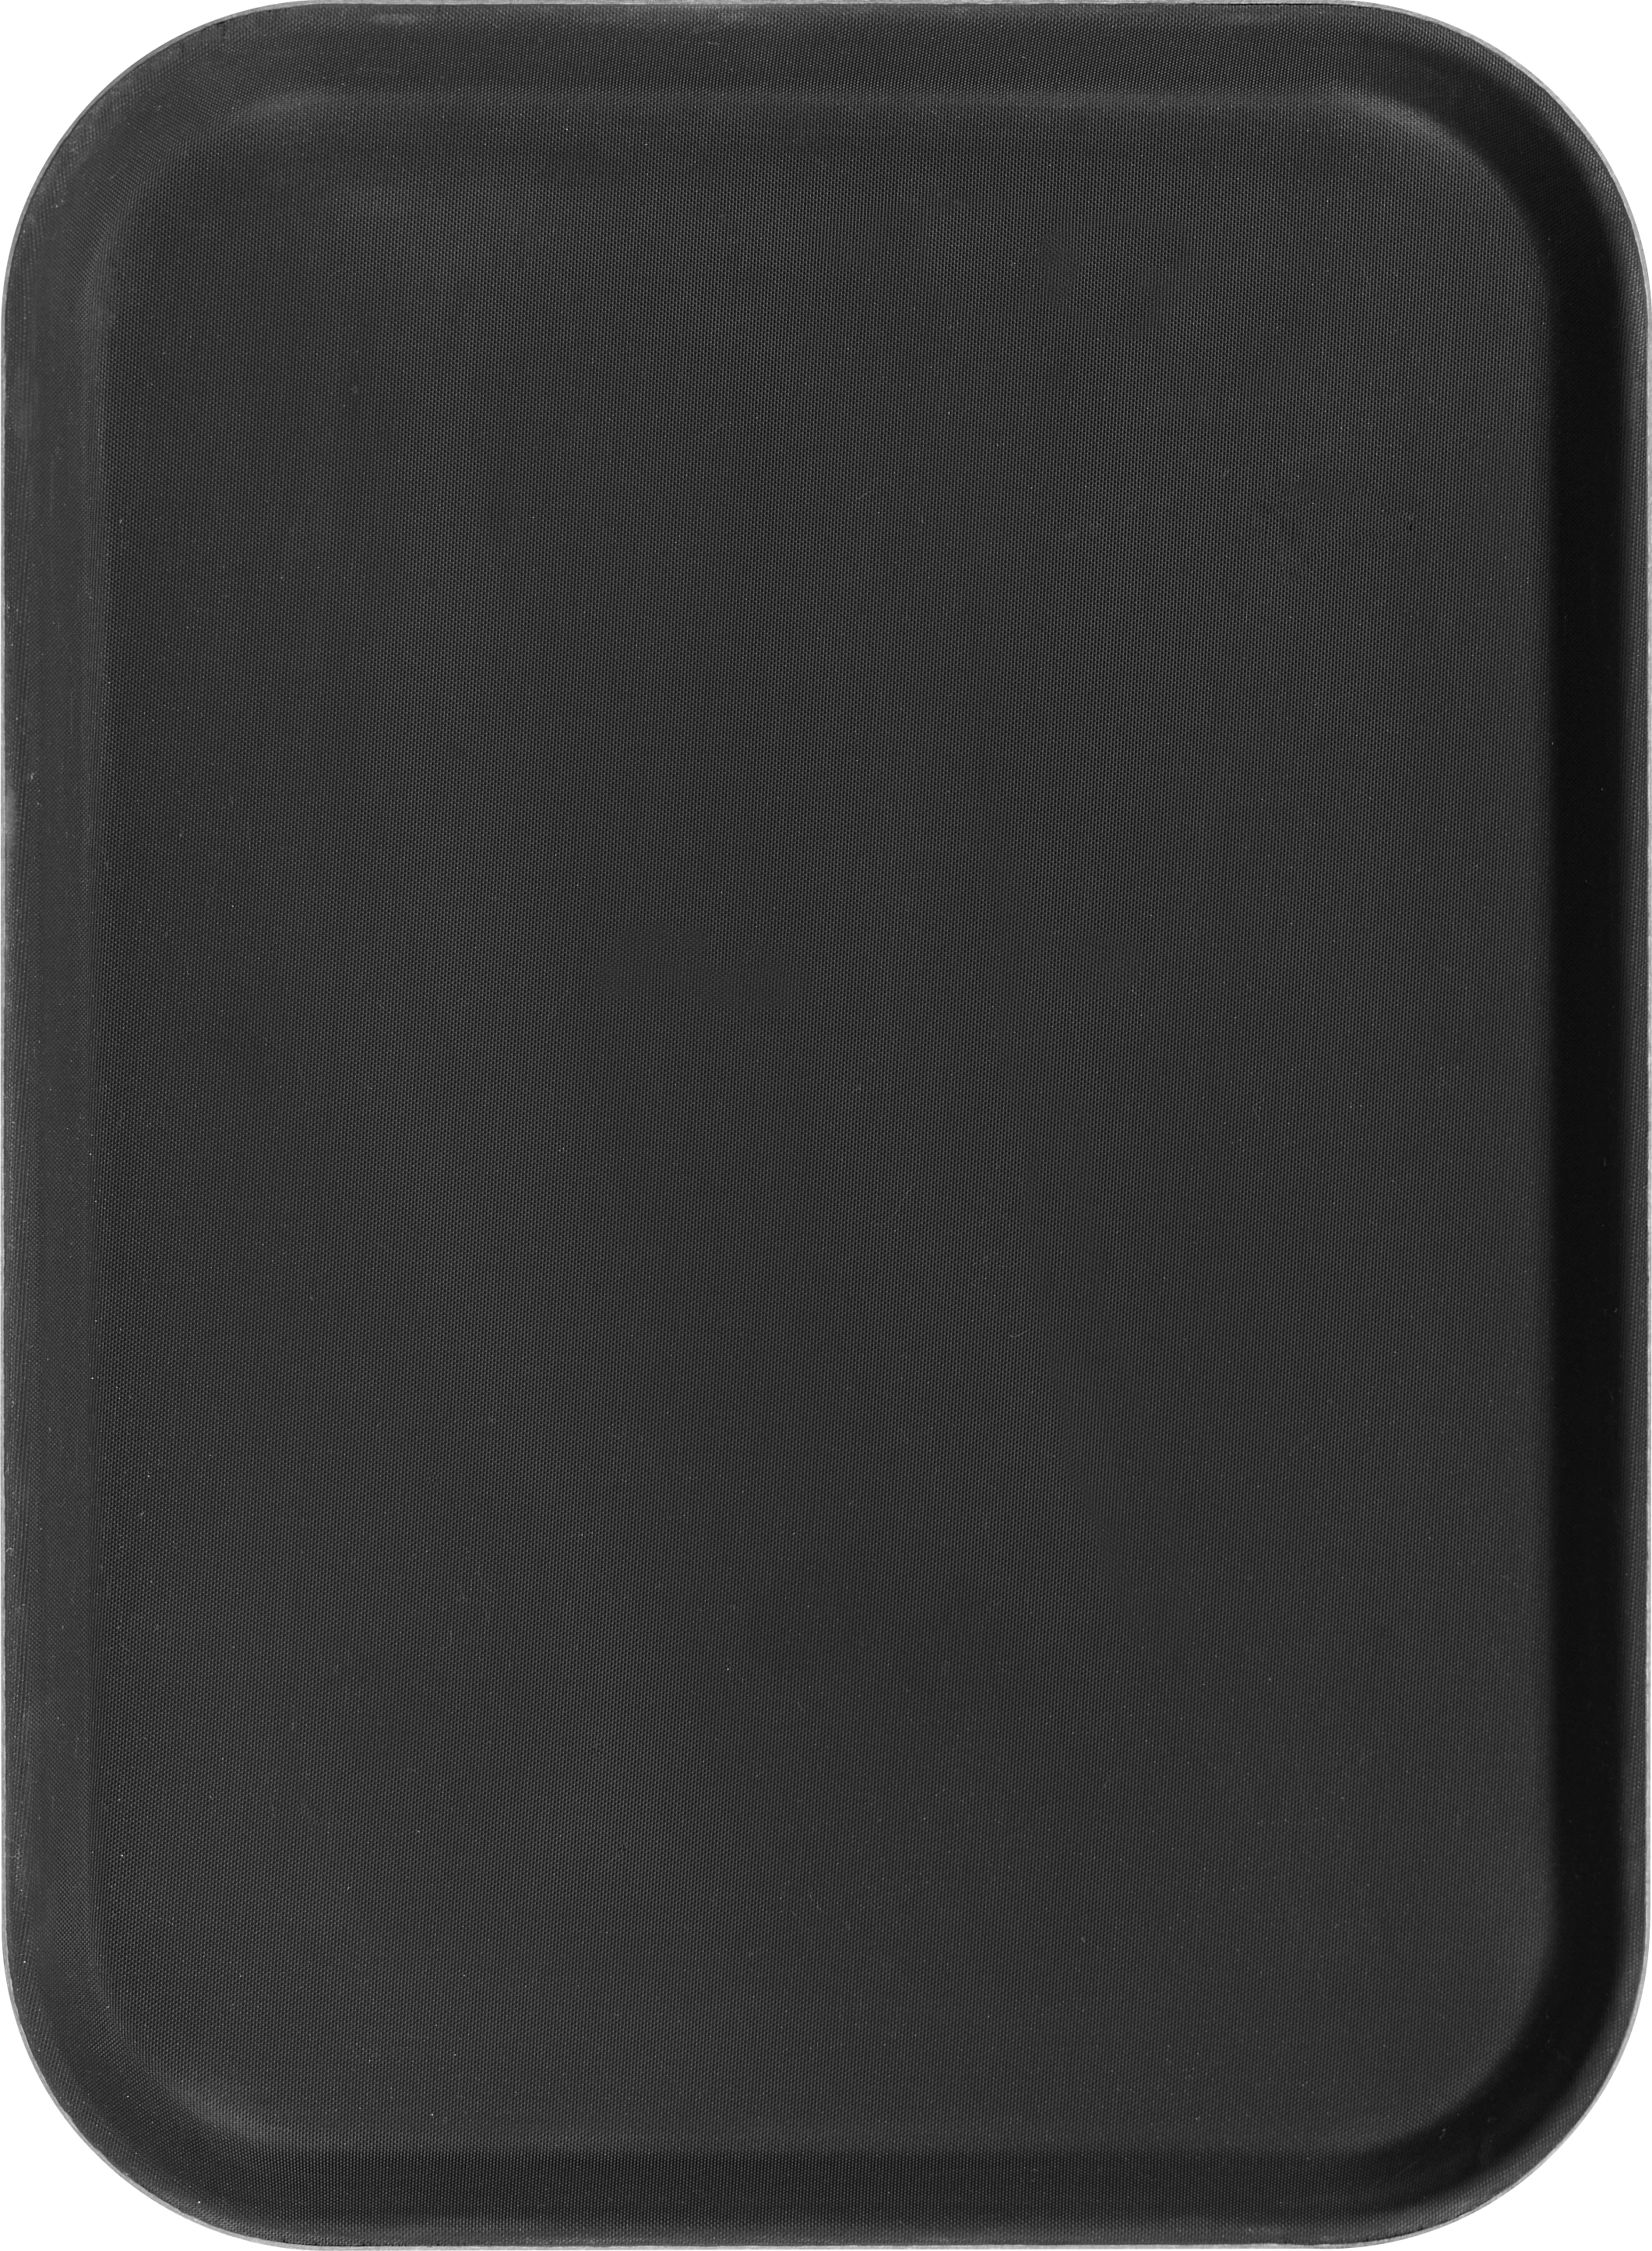 Cambro bakke, sort gummi, 53 x 32,5 cm